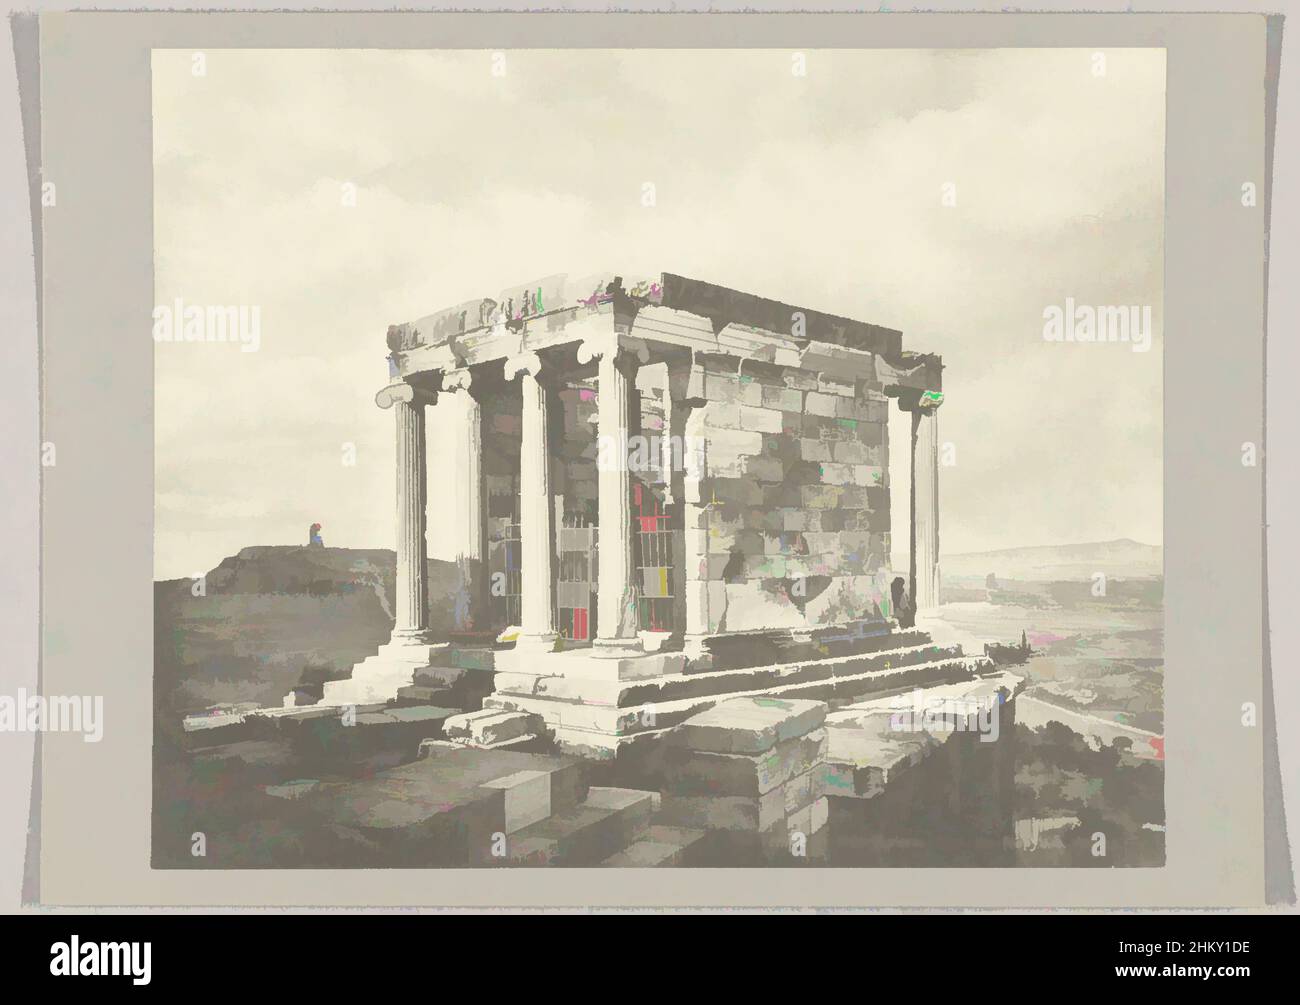 Temple nike apteros fotografías e imágenes de alta resolución - Alamy